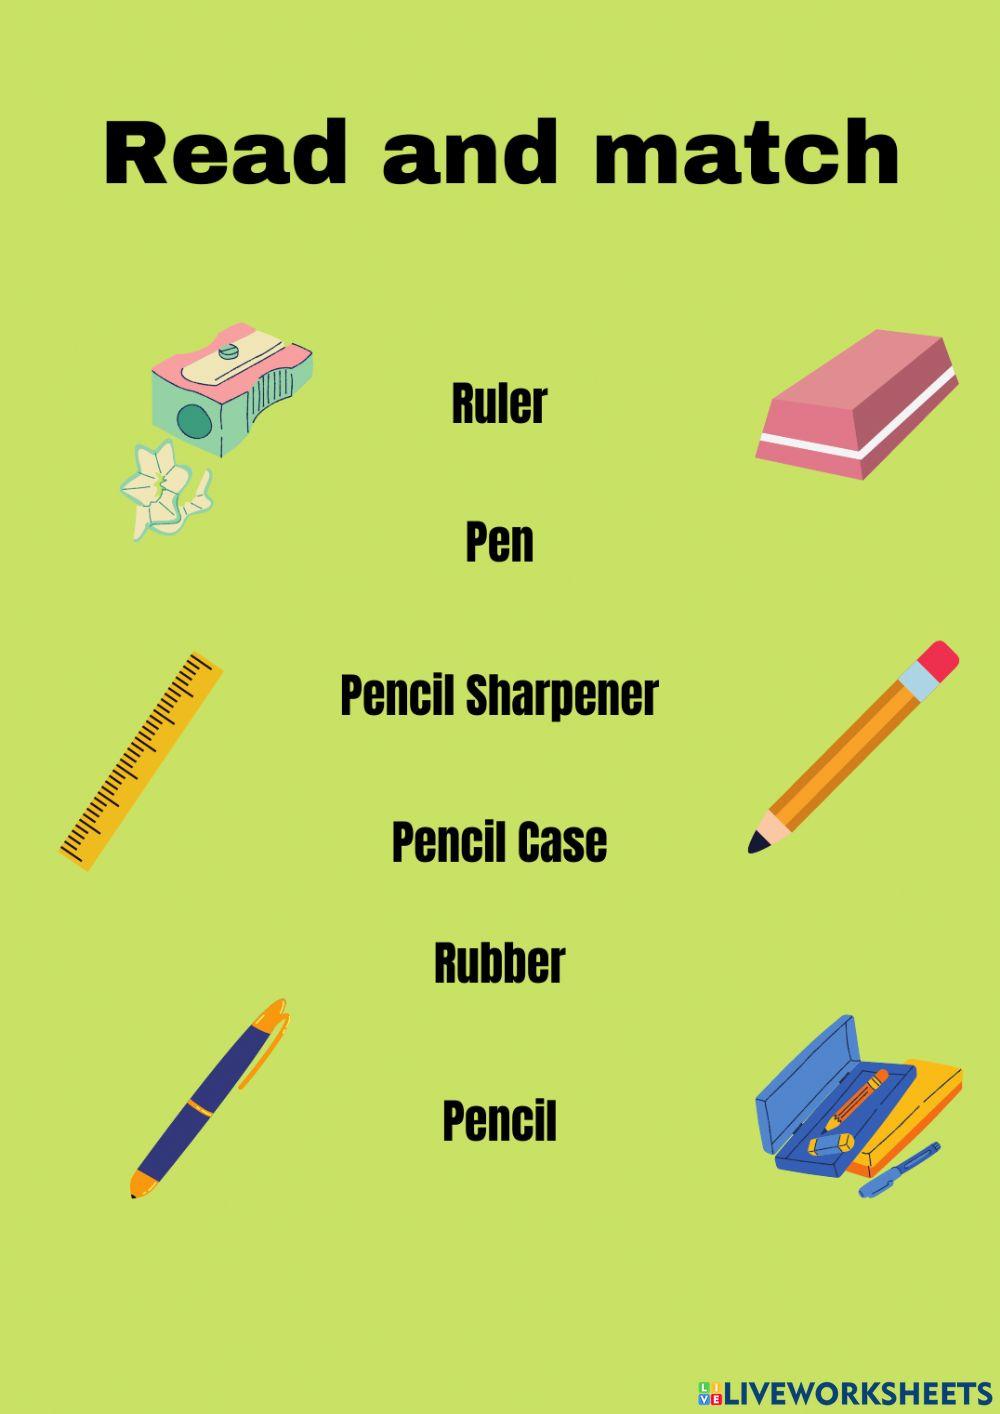 Pencil Case vocabulary